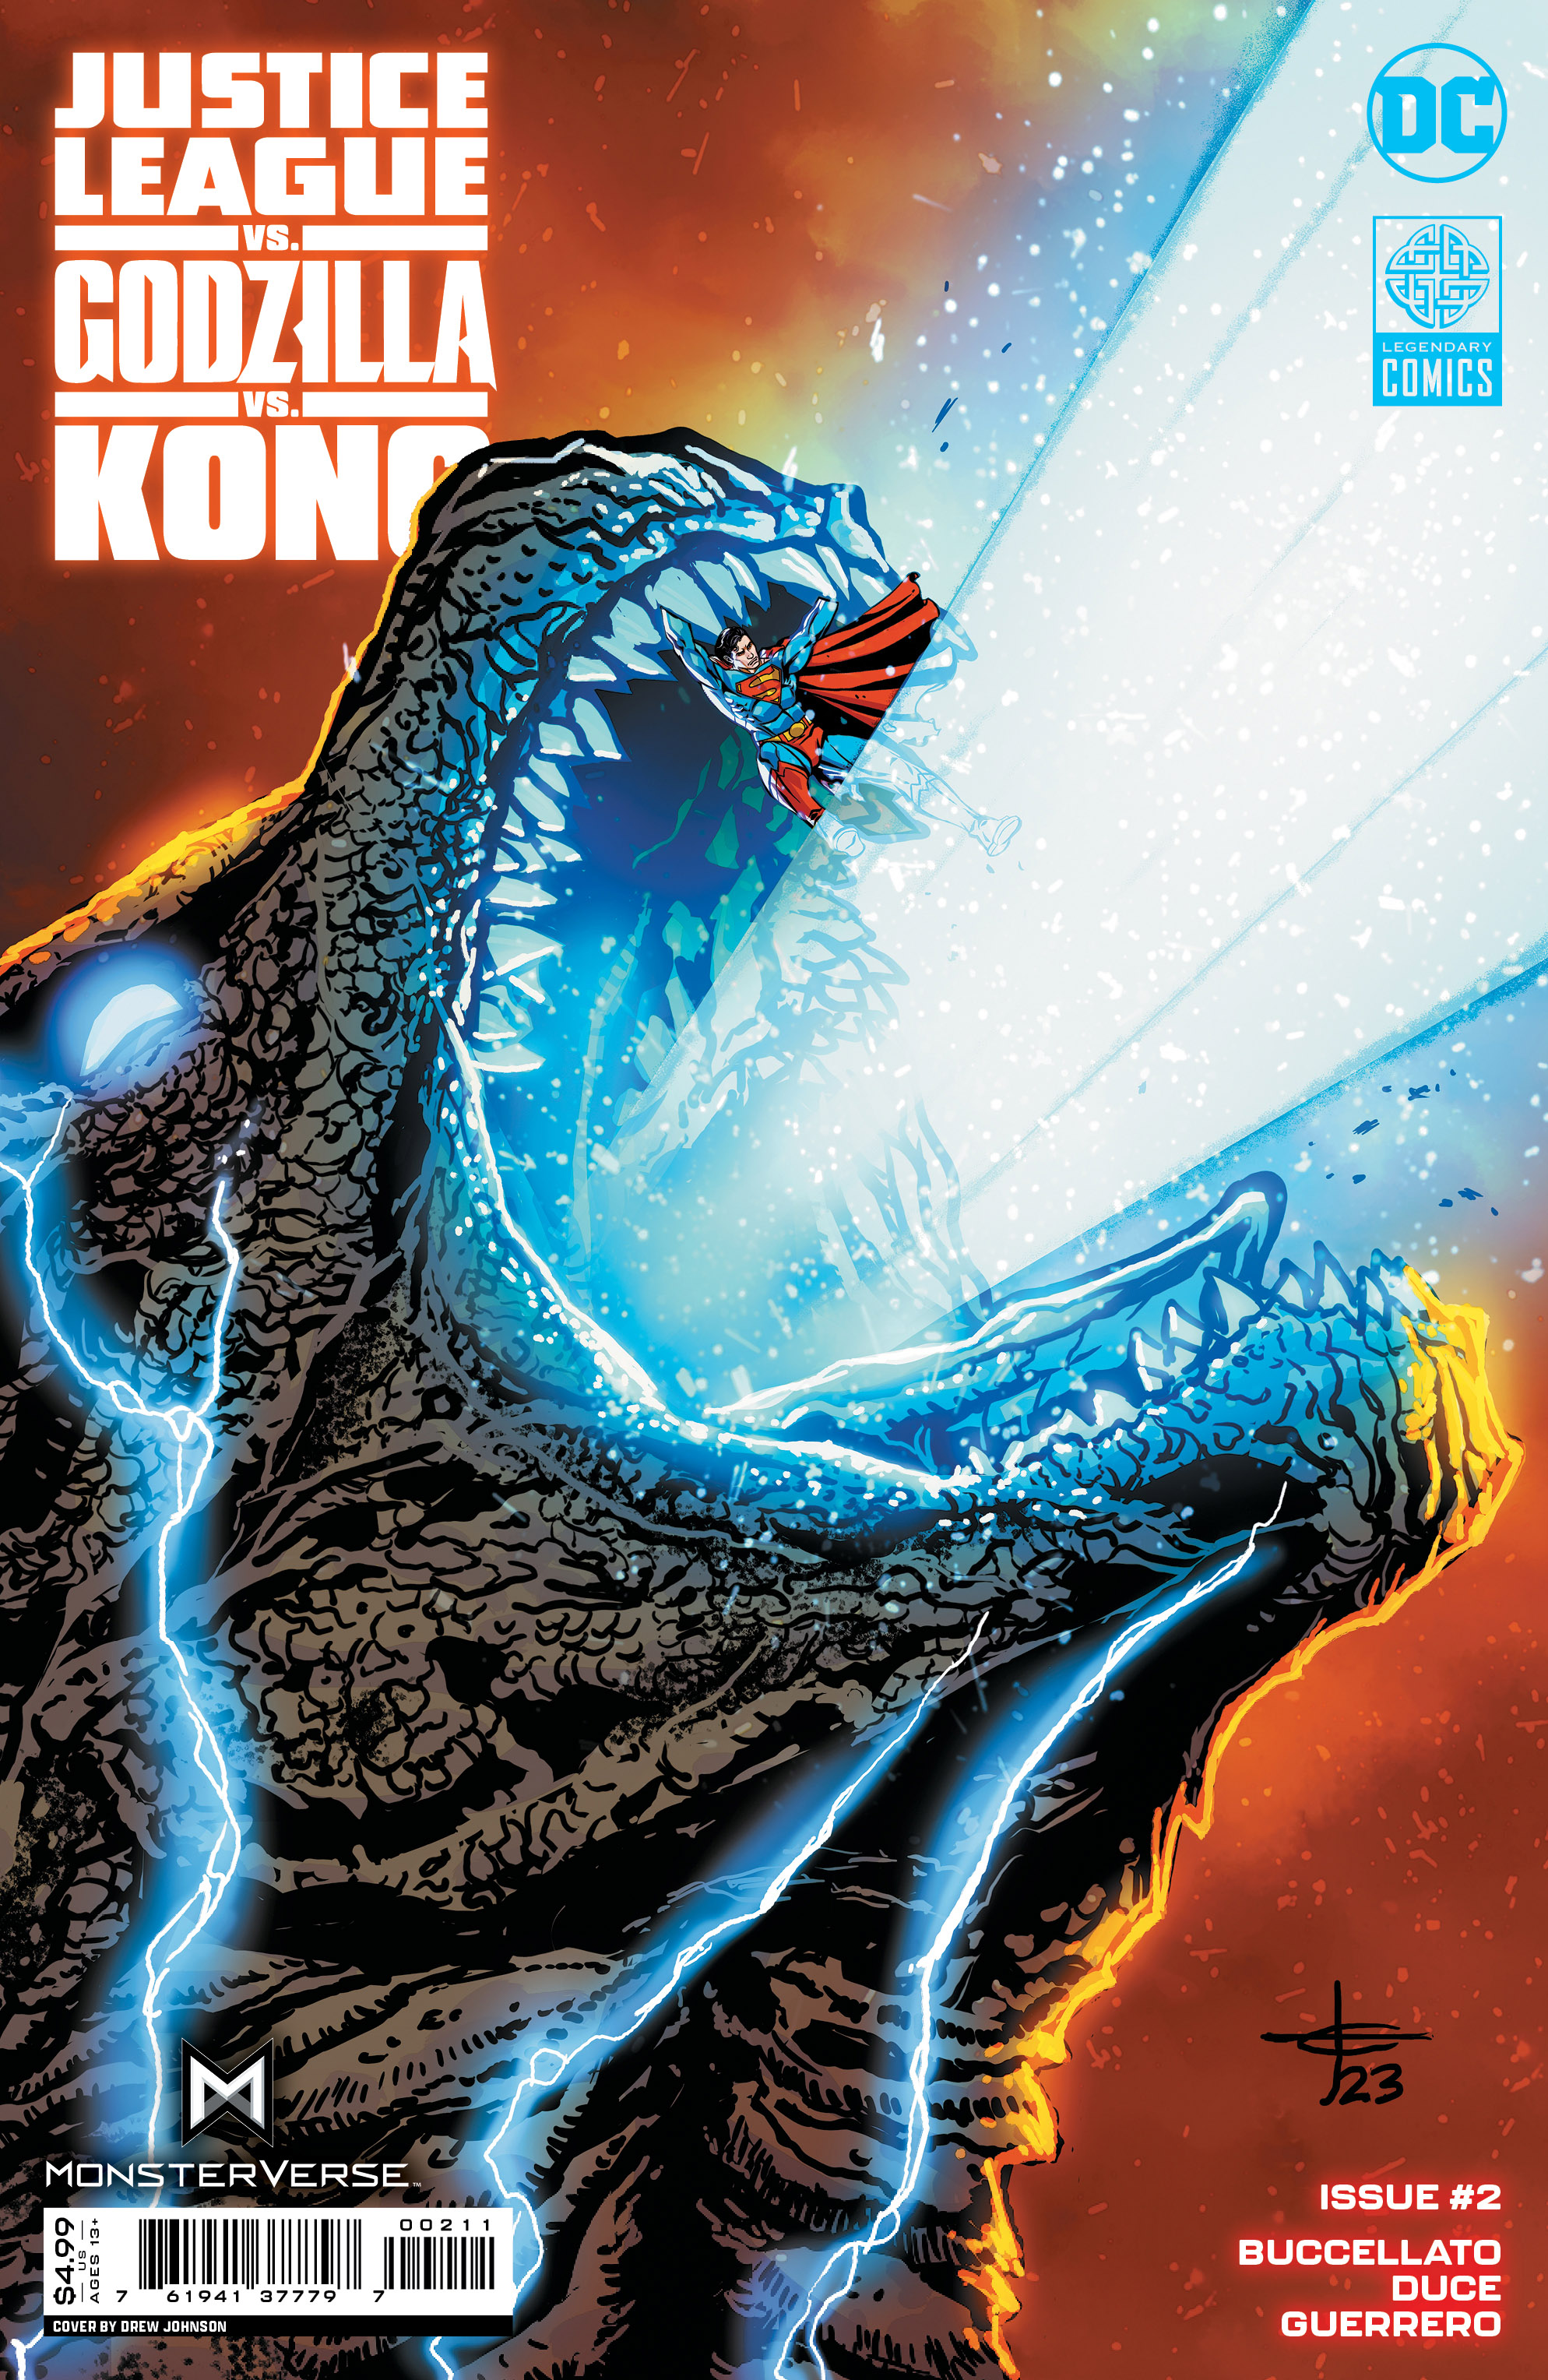 Justice League Vs Godzilla Vs Kong #2 Cover A Drew Johnson (Of 7)